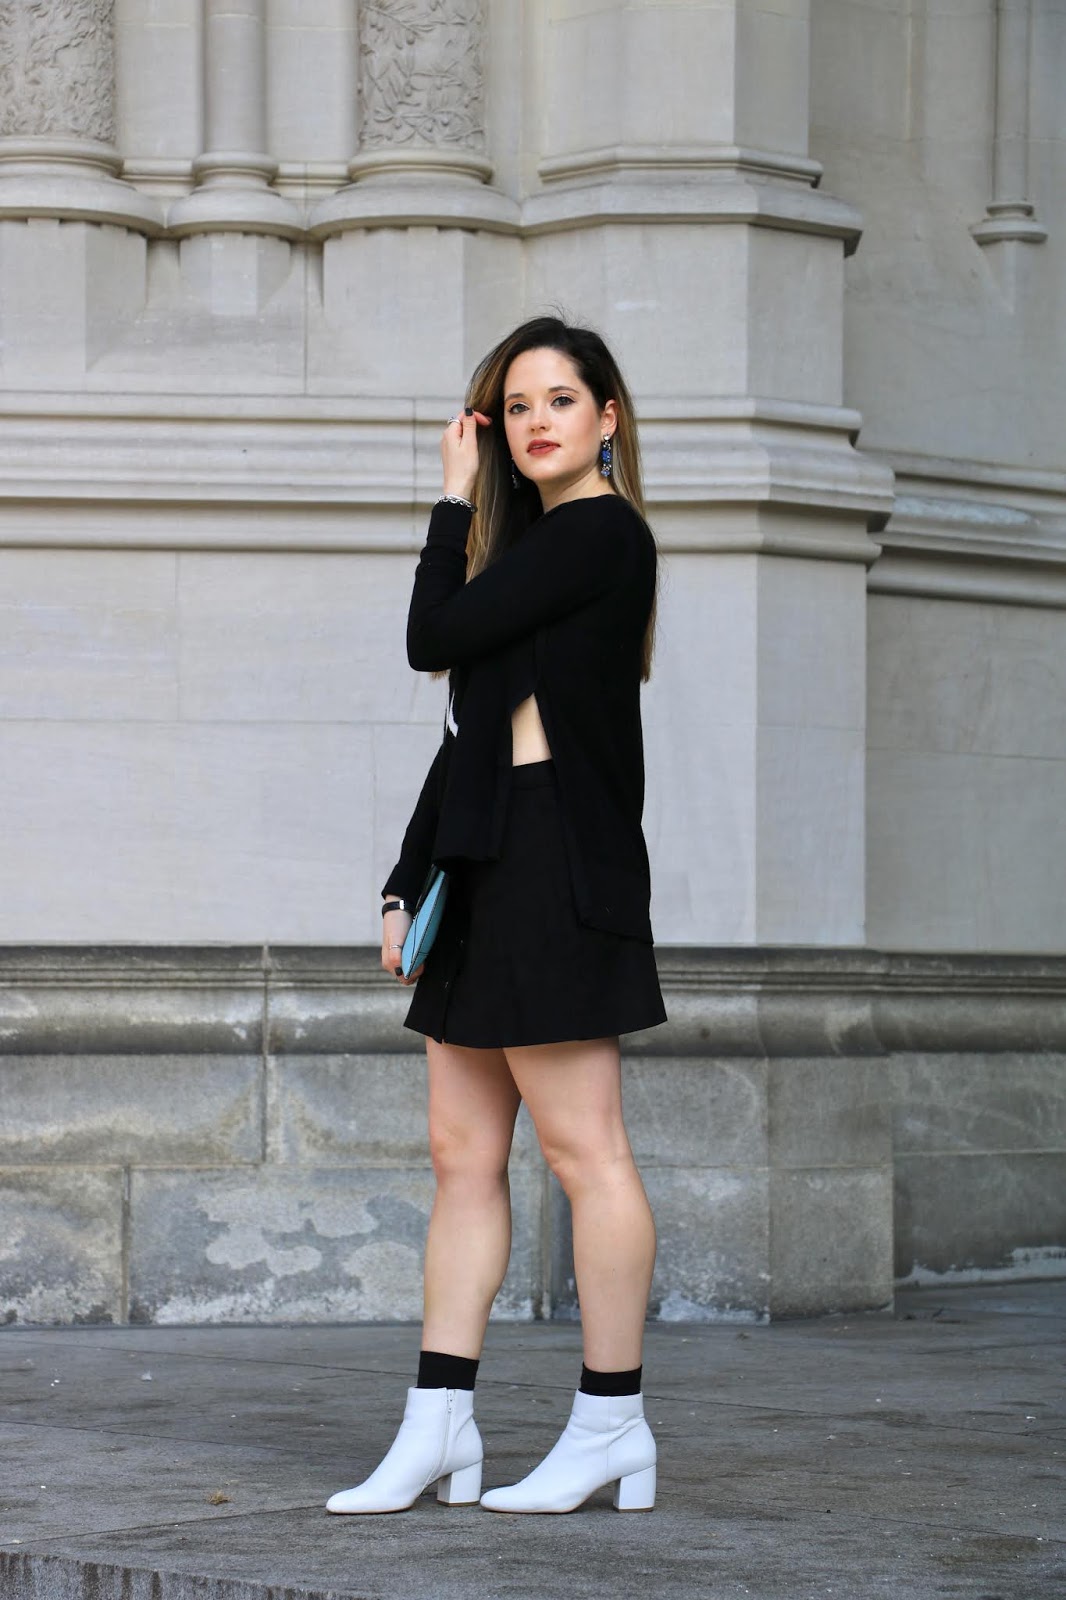 Nyc fashion blogger Kathleen Harper's spring street style